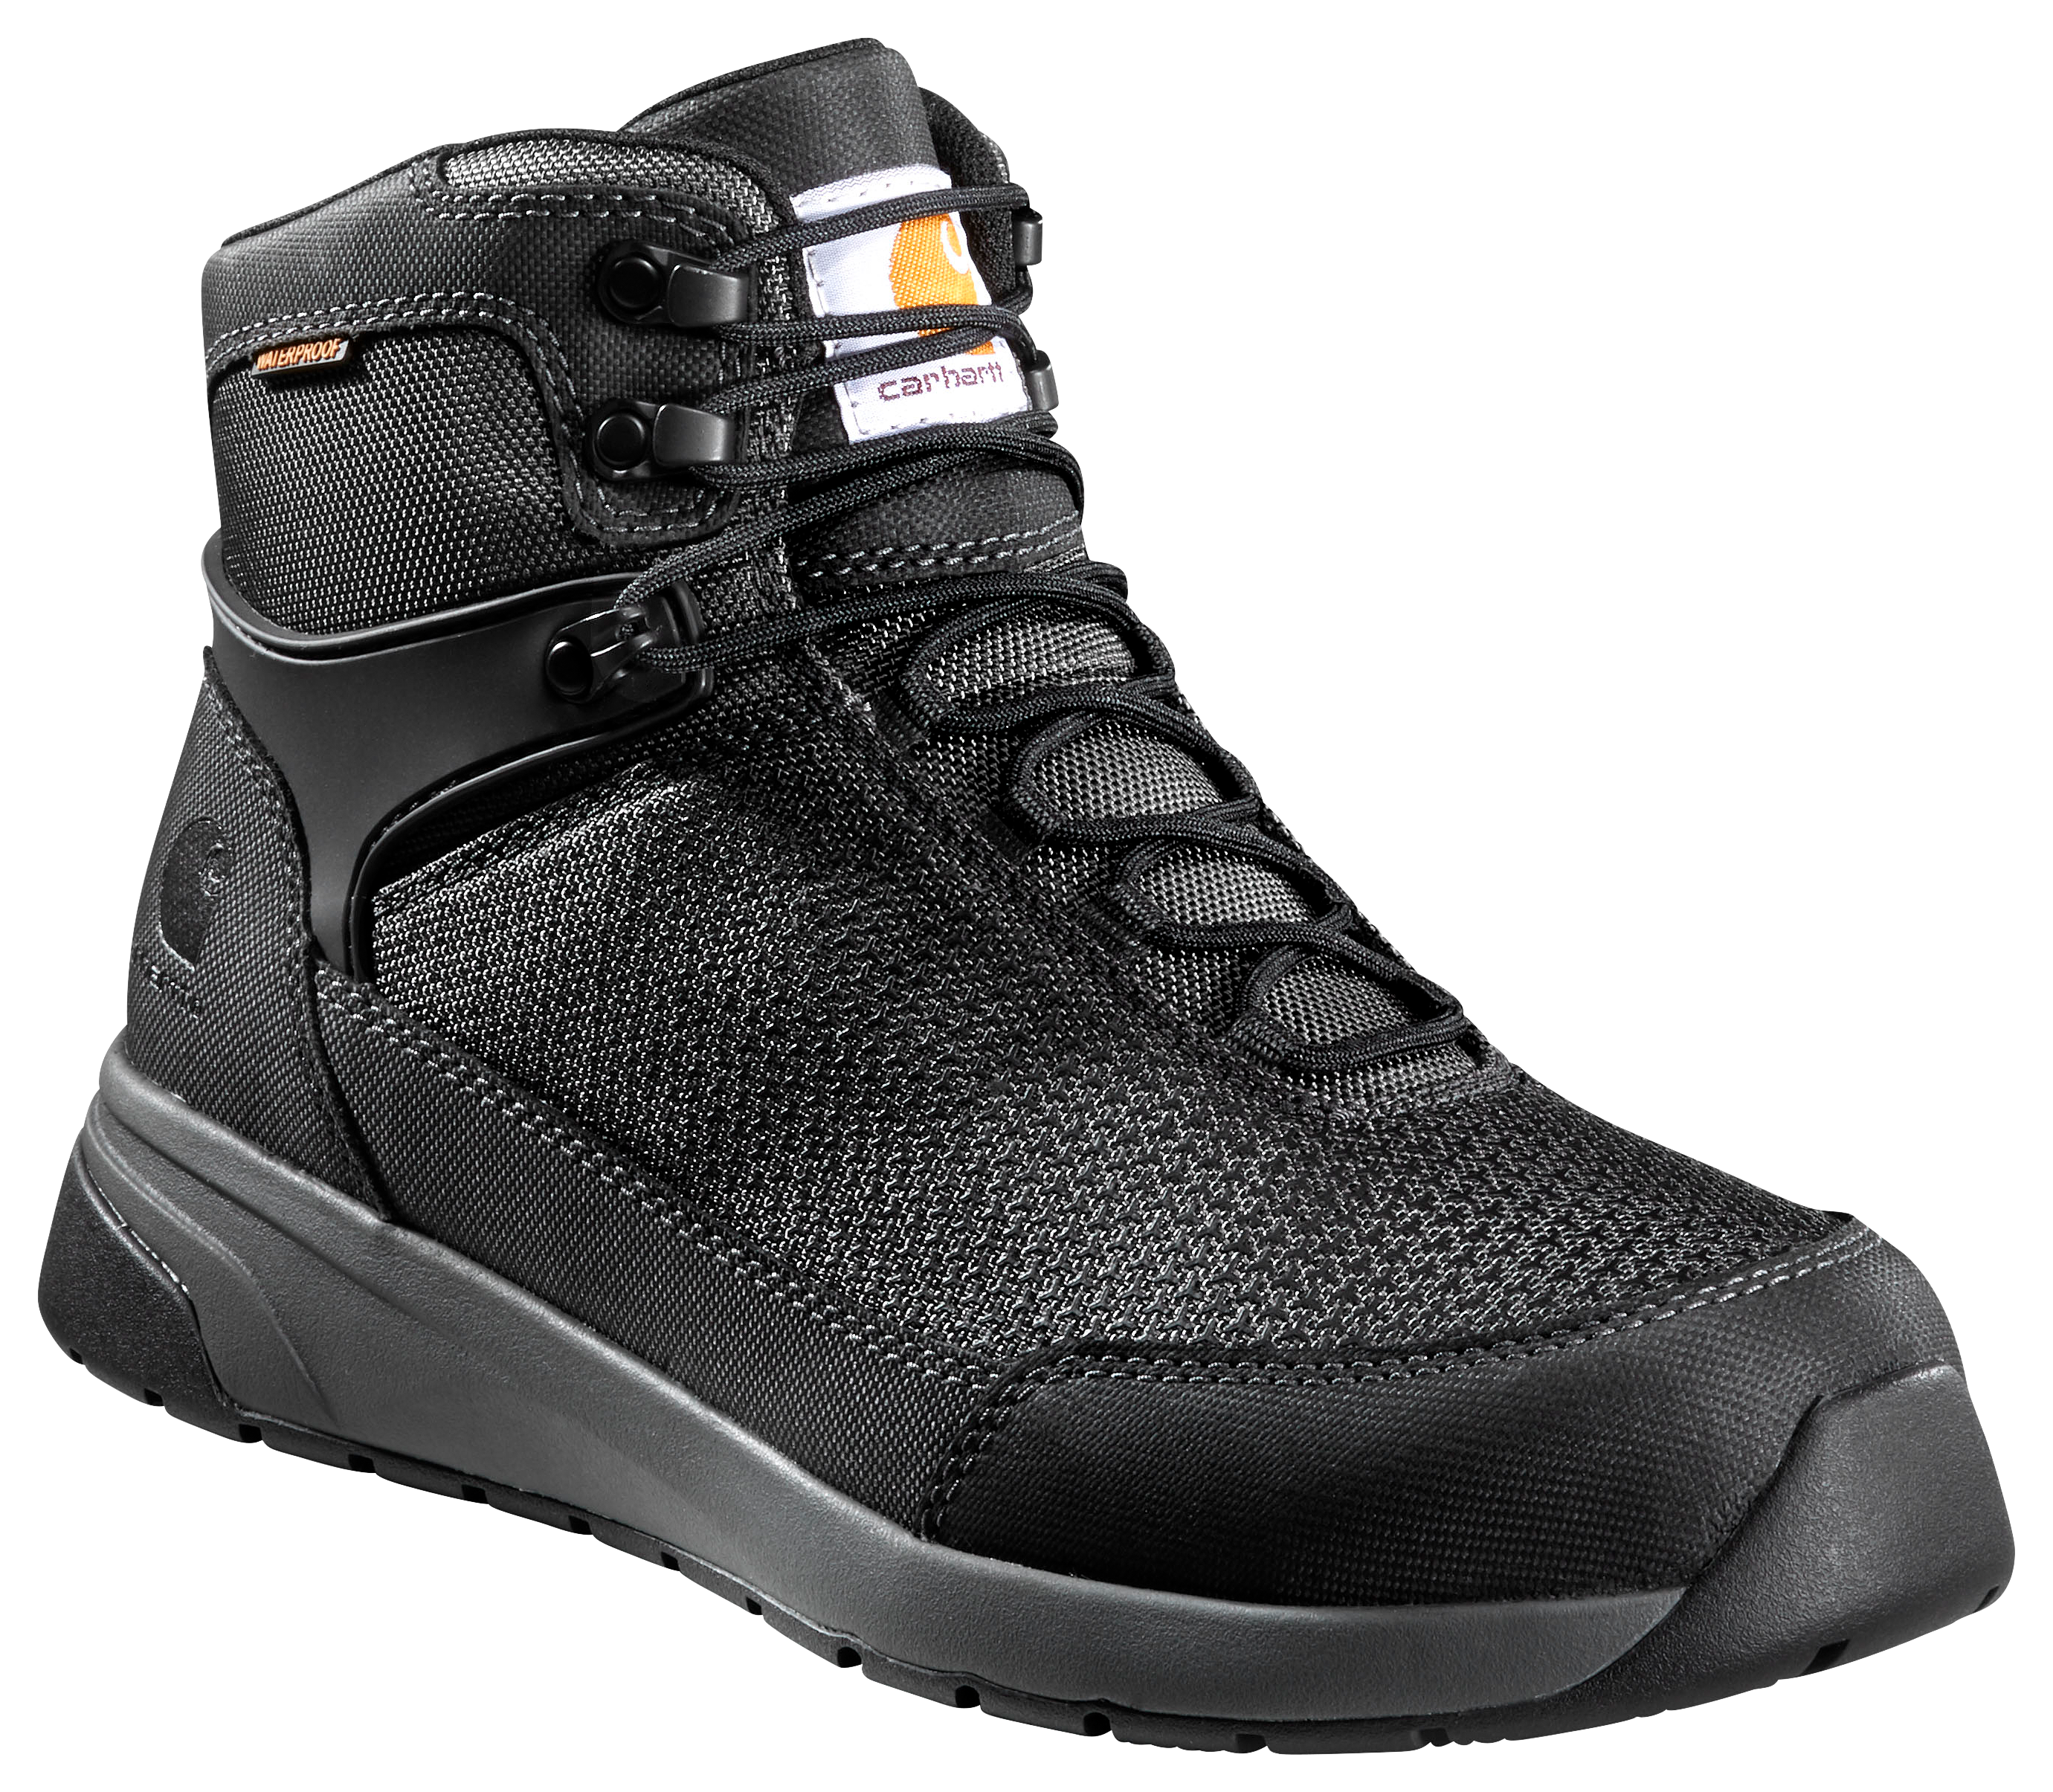 Carhartt Force 6"" Nano Composite-Toe Work Boots for Men - Black - 13W